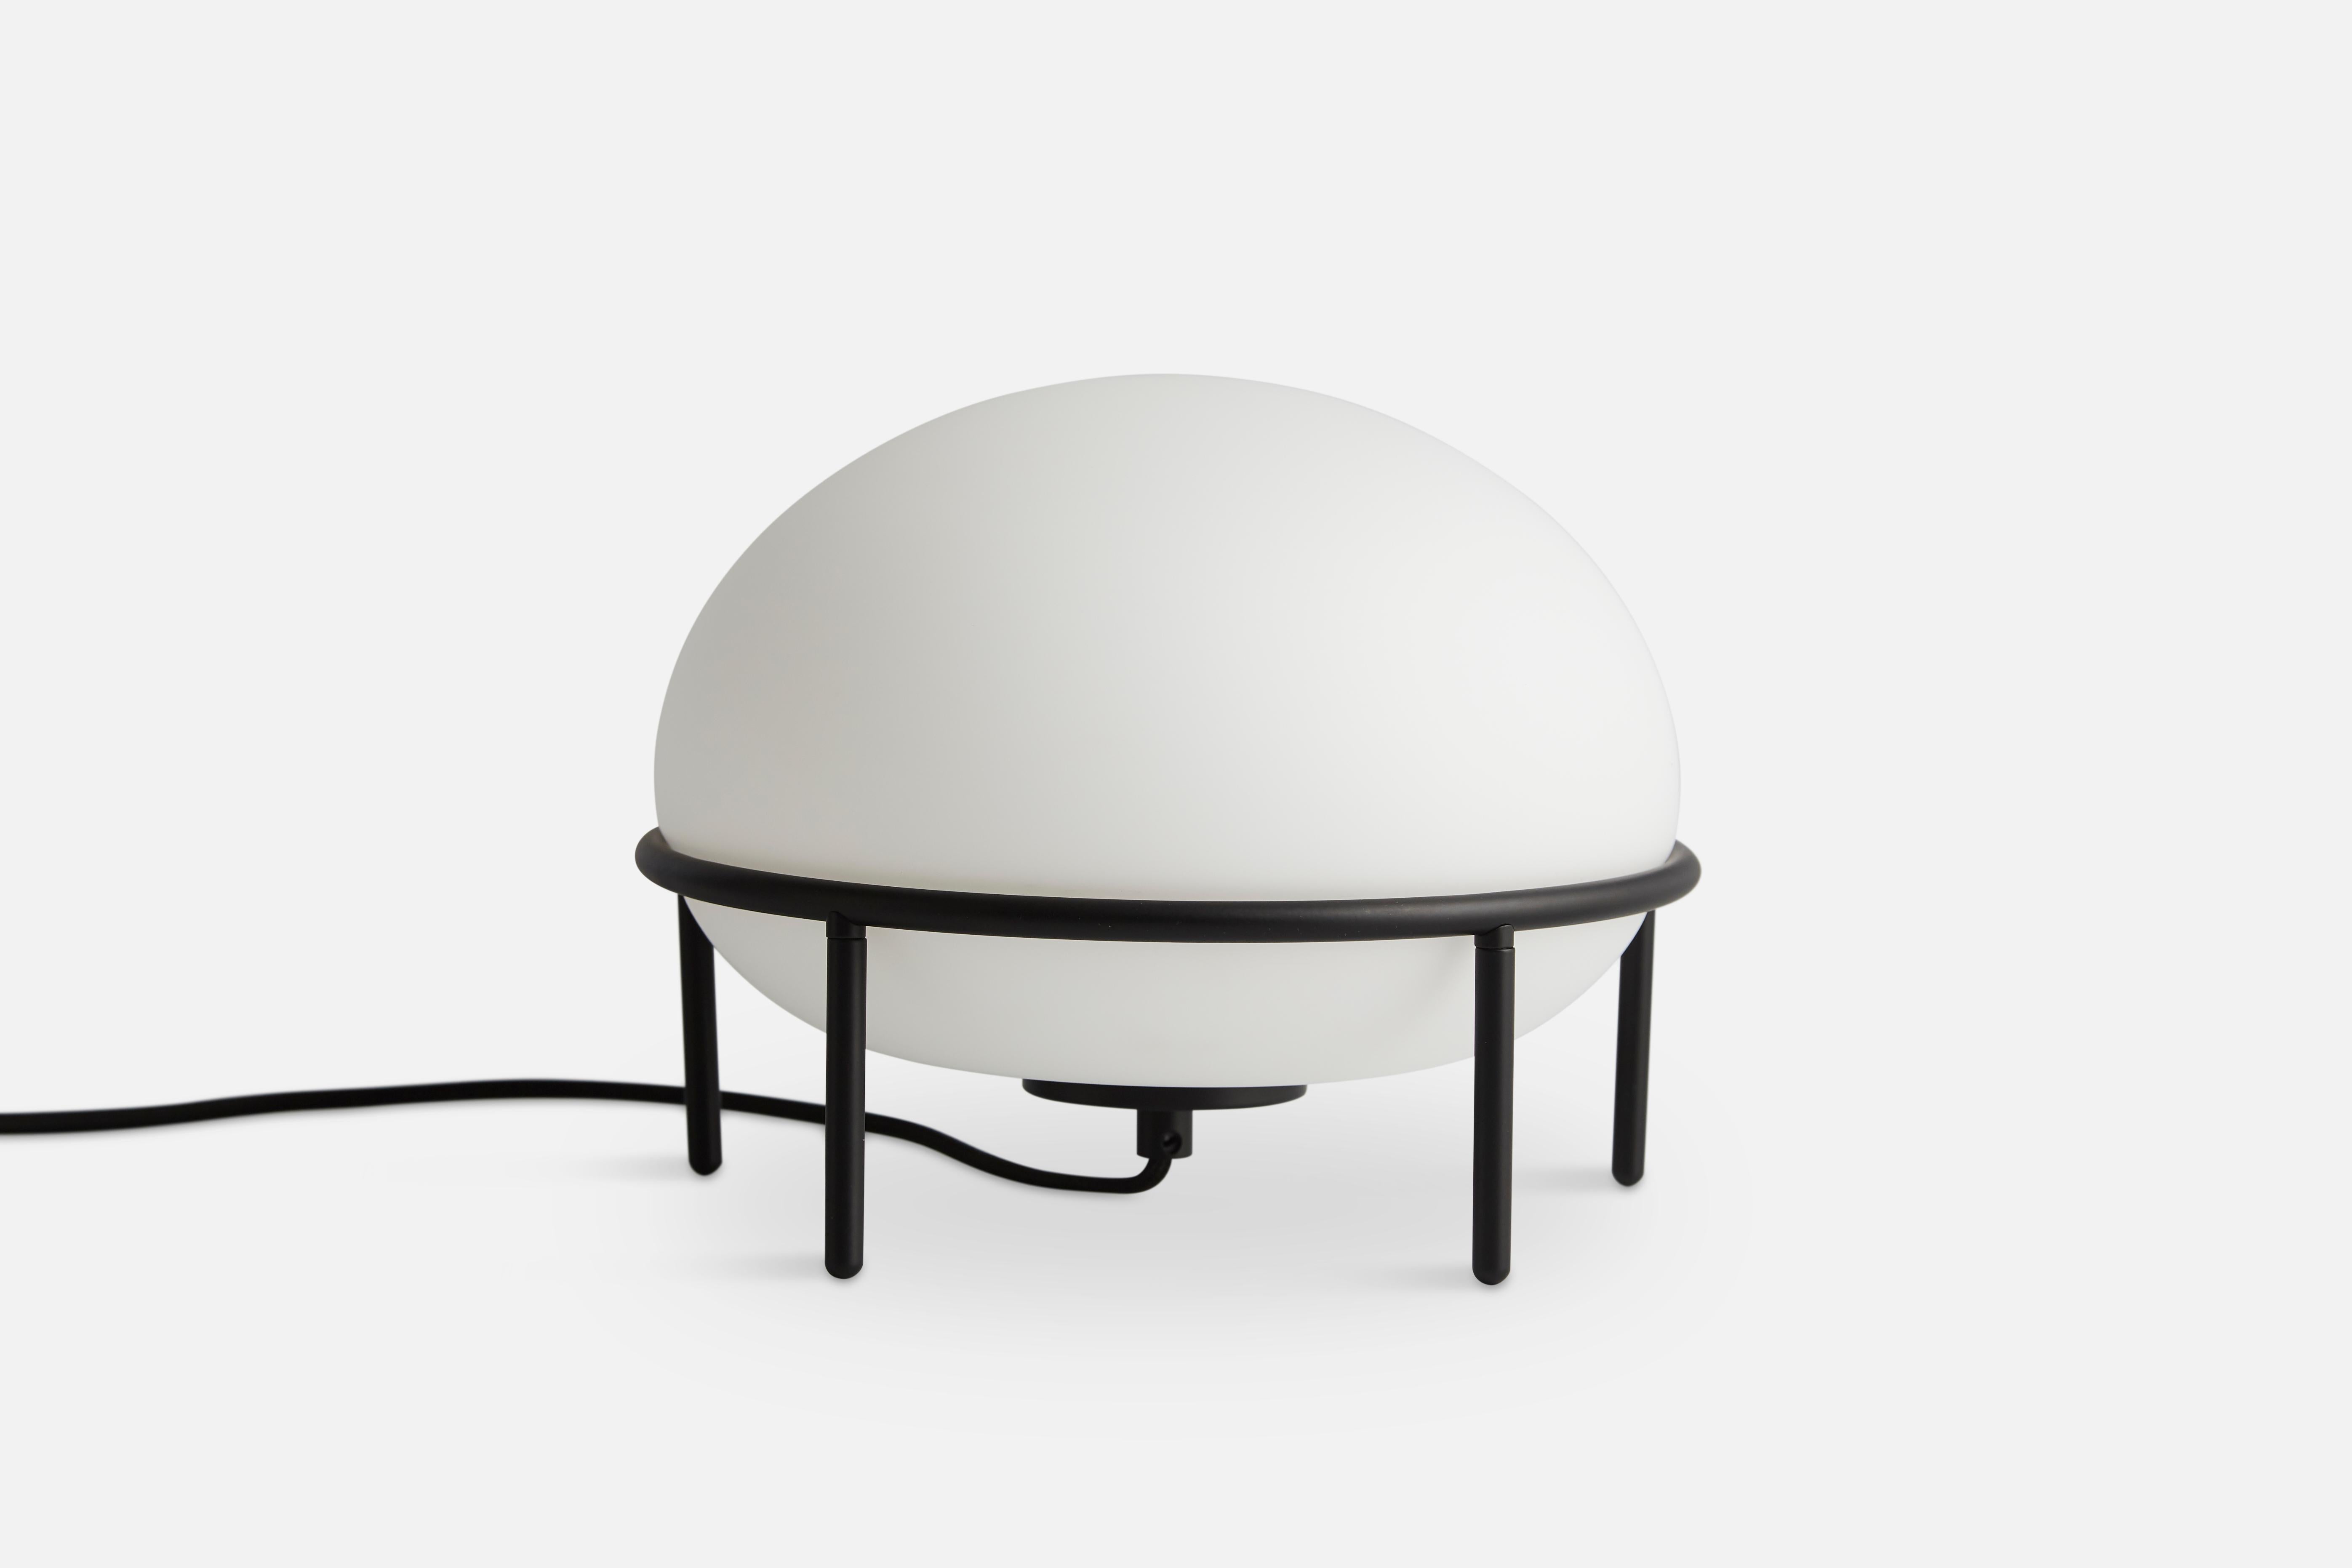 Pump table lamp by Kutarq Studio.
Materials: metal, glass.
Dimensions: D 24 x H 22 cm.

KUTARQ Studio is a multidisciplinary design studio based in Spain. The Architect and designer behind the studio, Jordi López Aguiló, designs lighting,